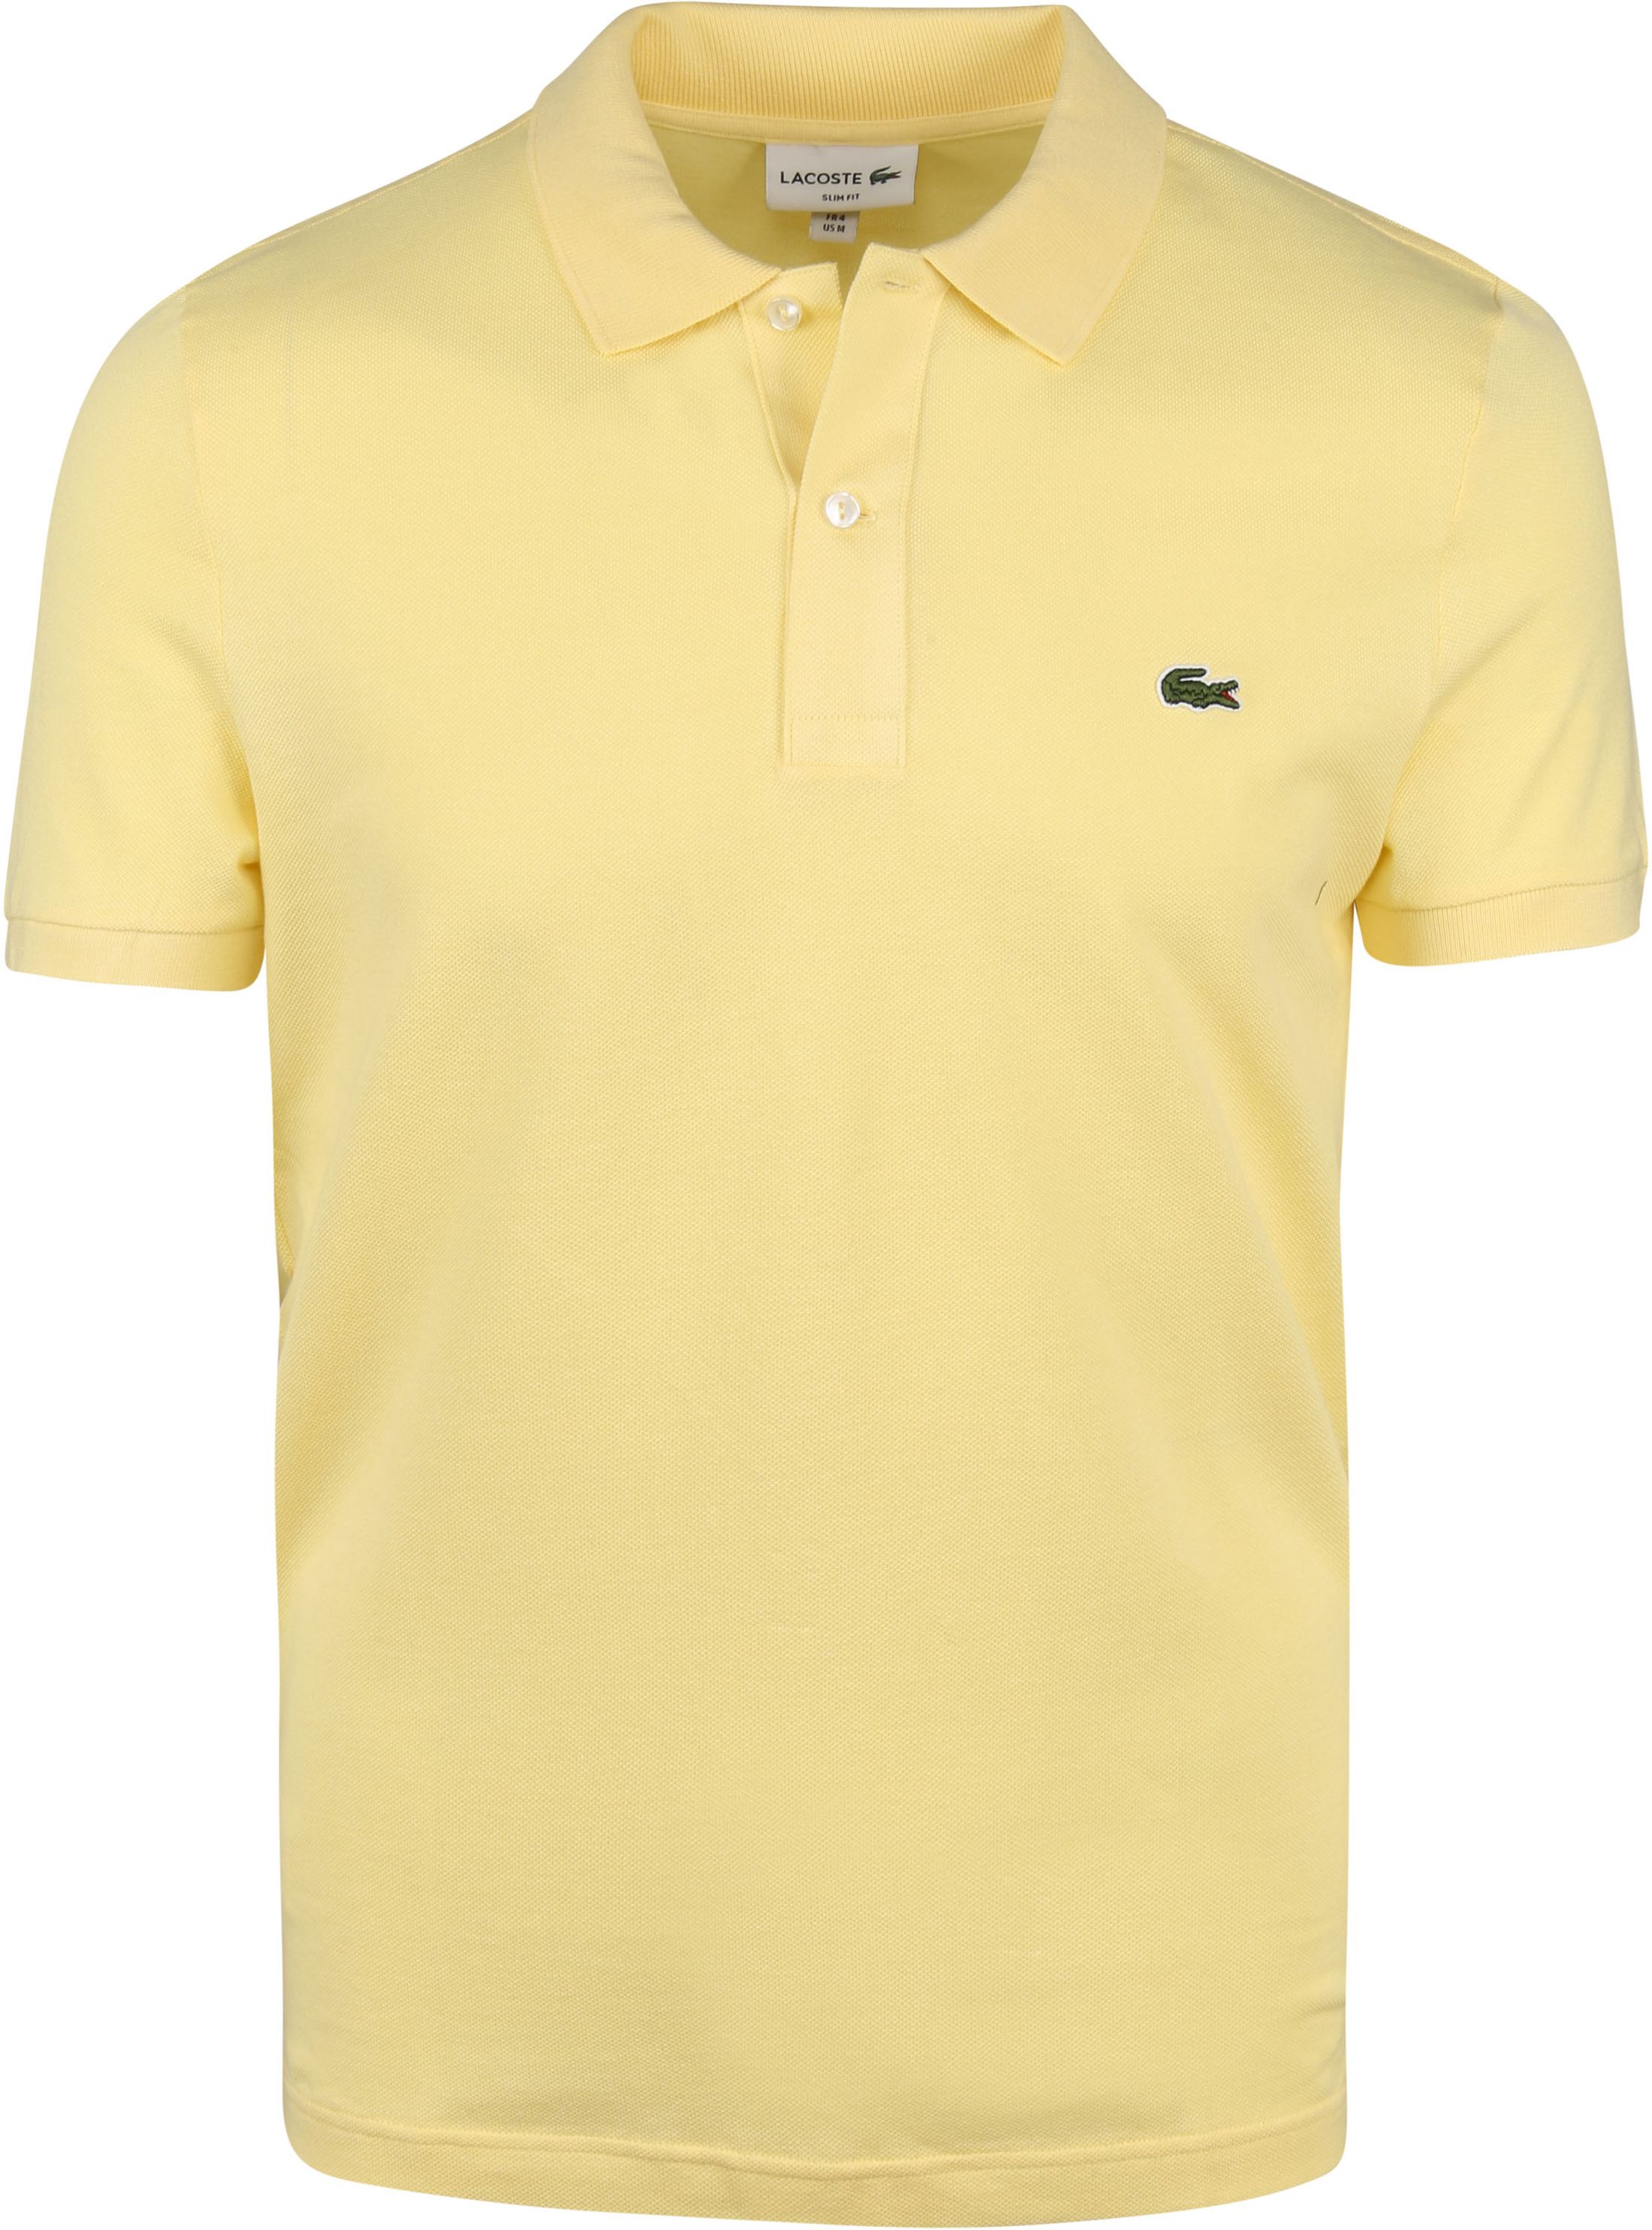 Lacoste Polo Shirt Pique Yellow size L